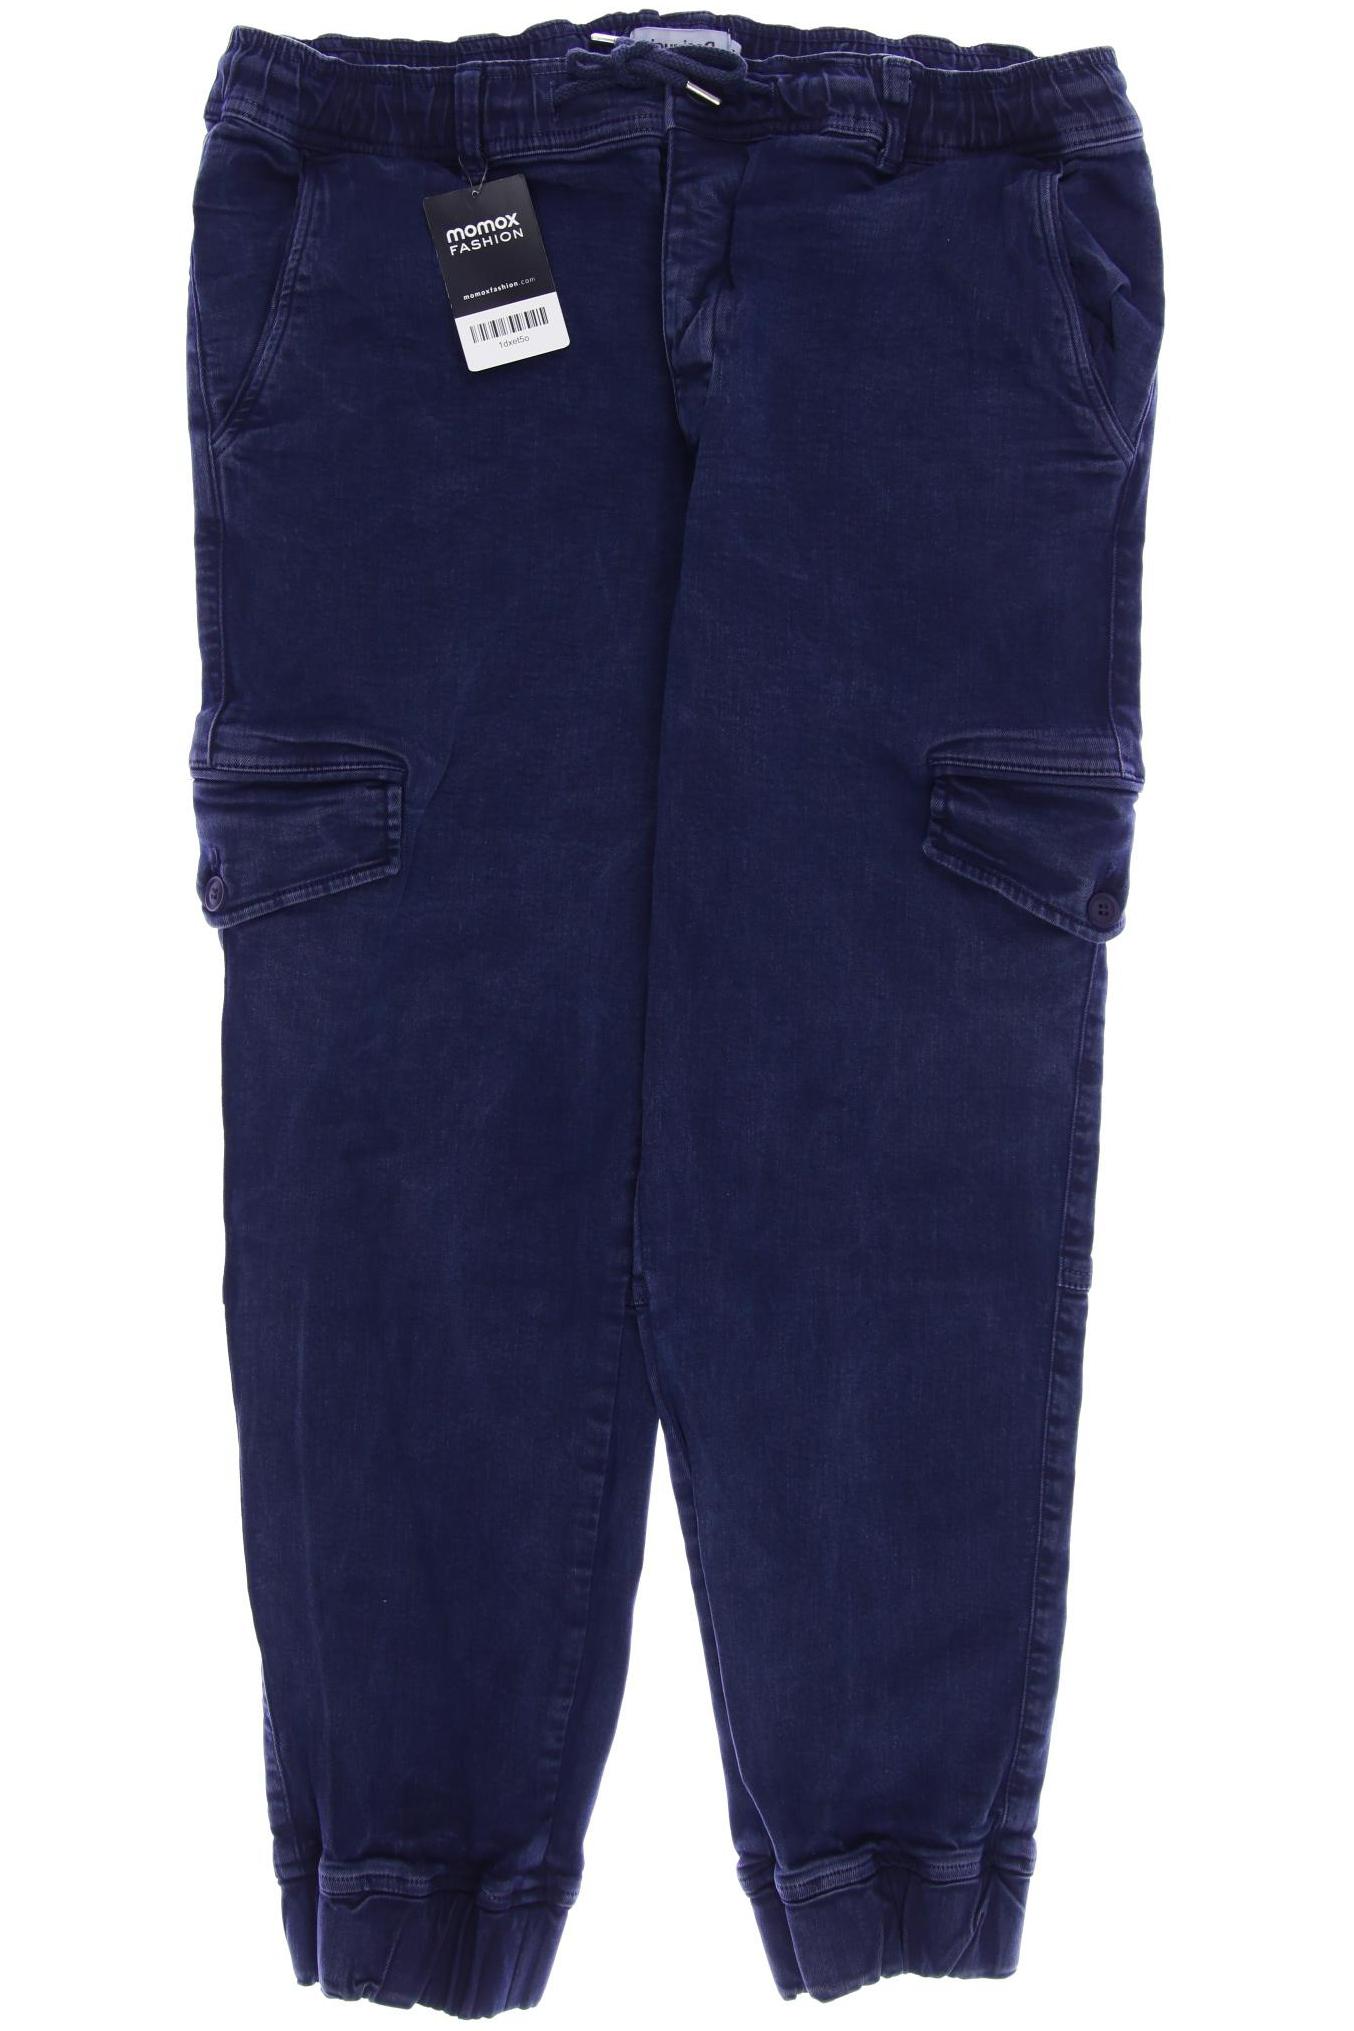 Desigual Herren Jeans, marineblau von Desigual